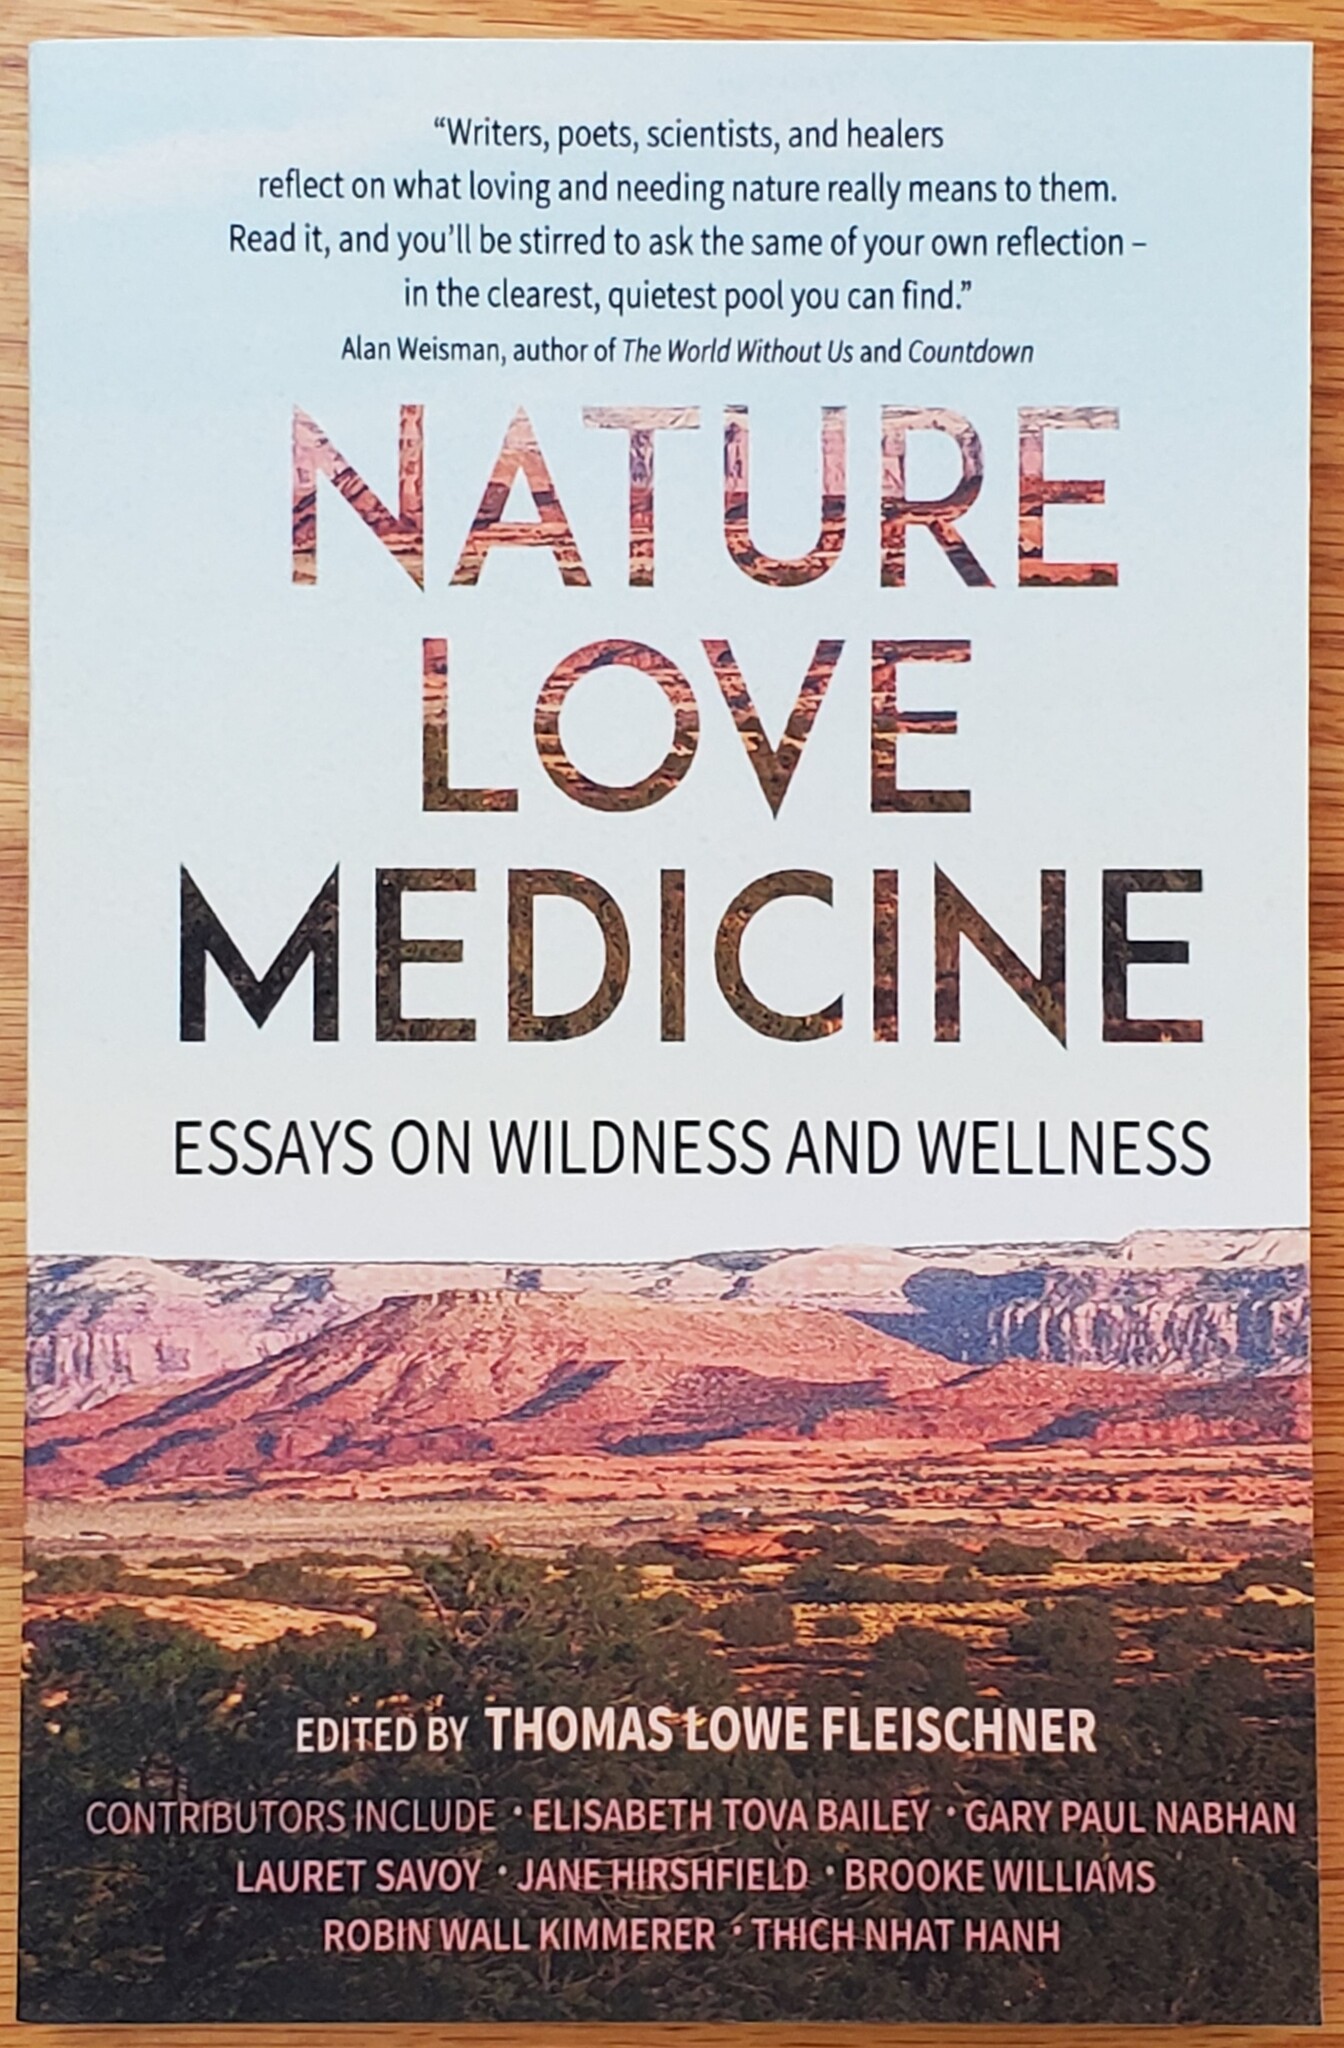 Nature Love Medicine